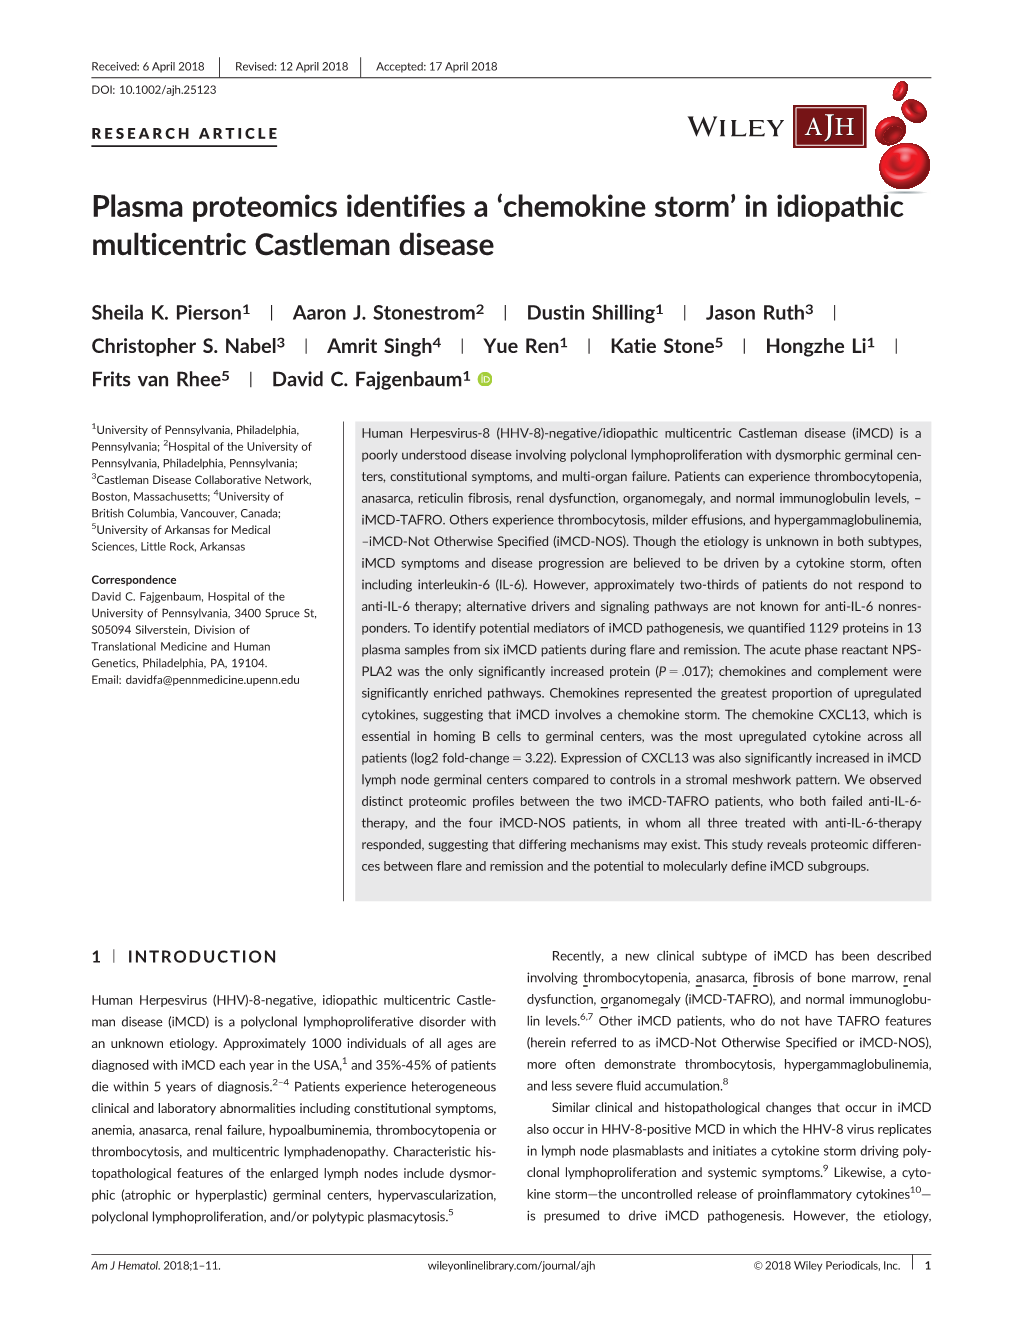 Plasma Proteomics Identifies a Chemokine Storm in Idiopathic